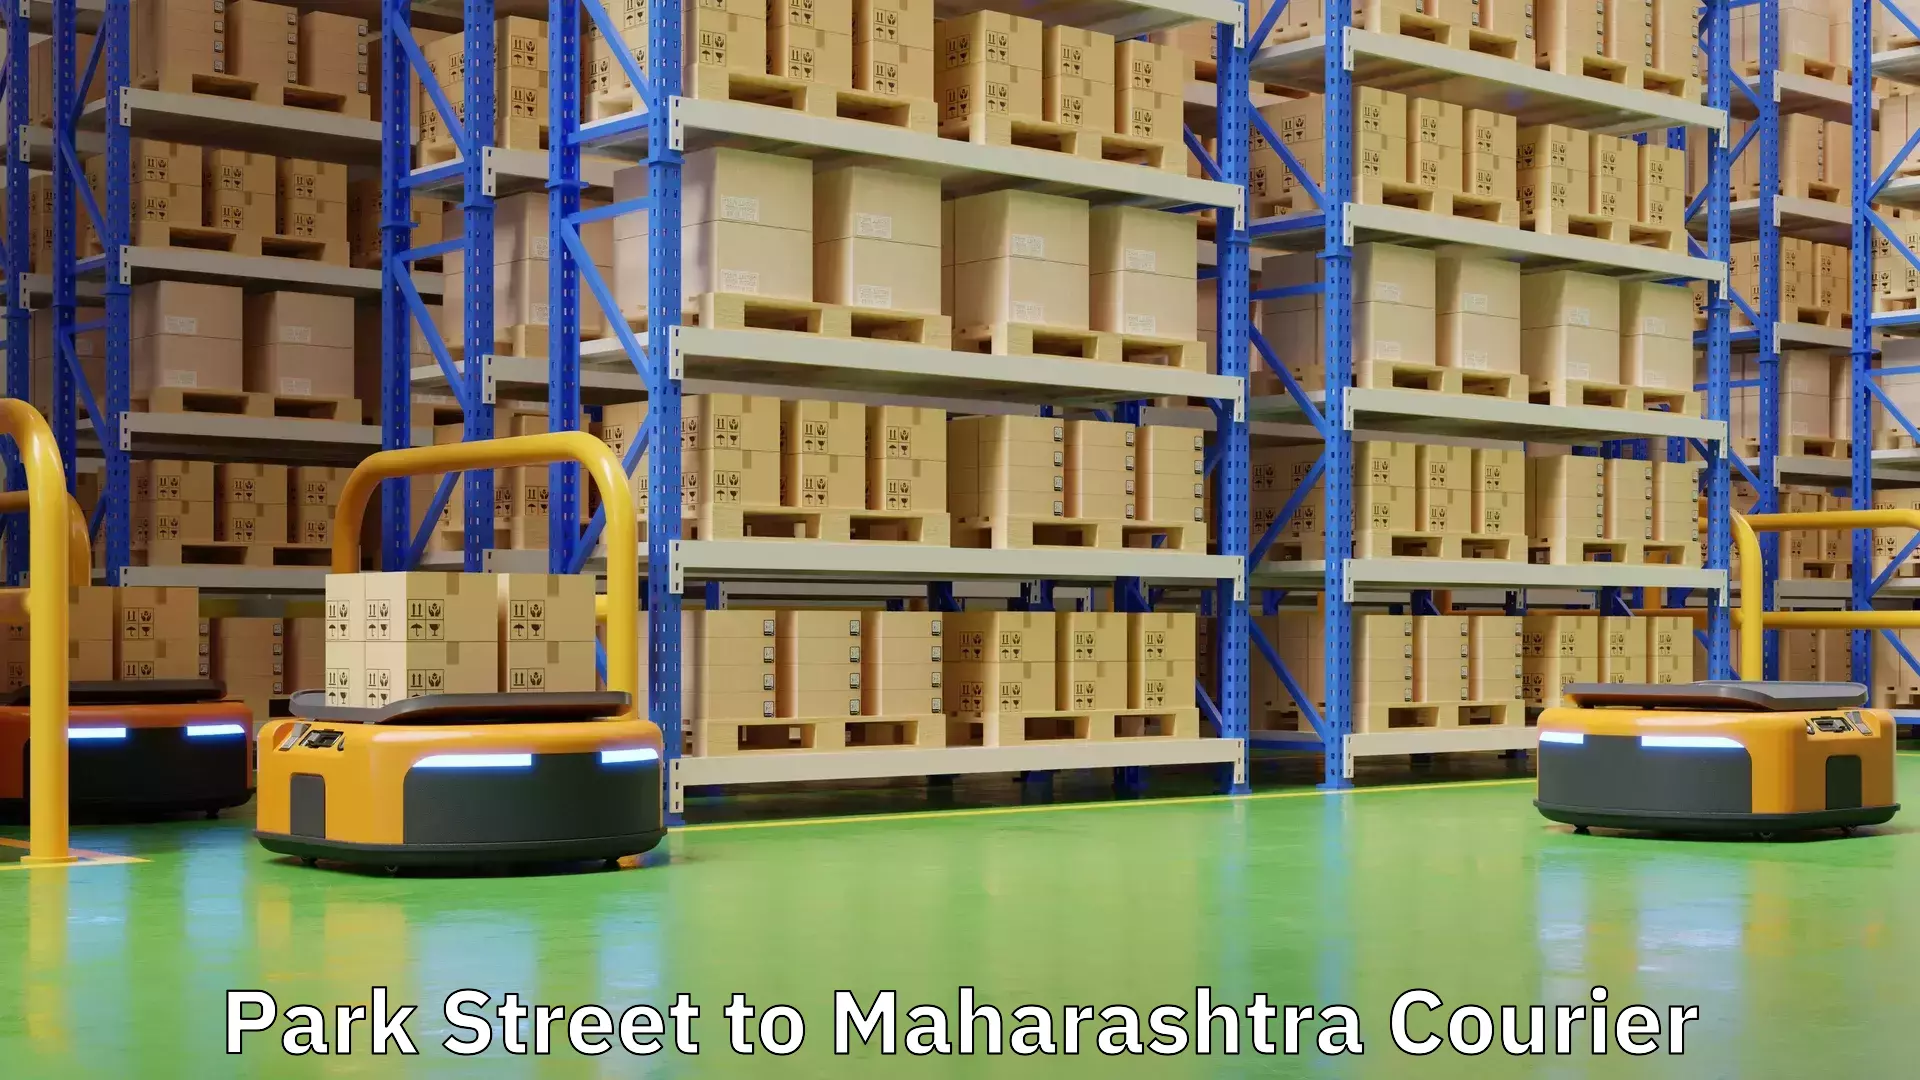 High-performance logistics Park Street to Maharashtra